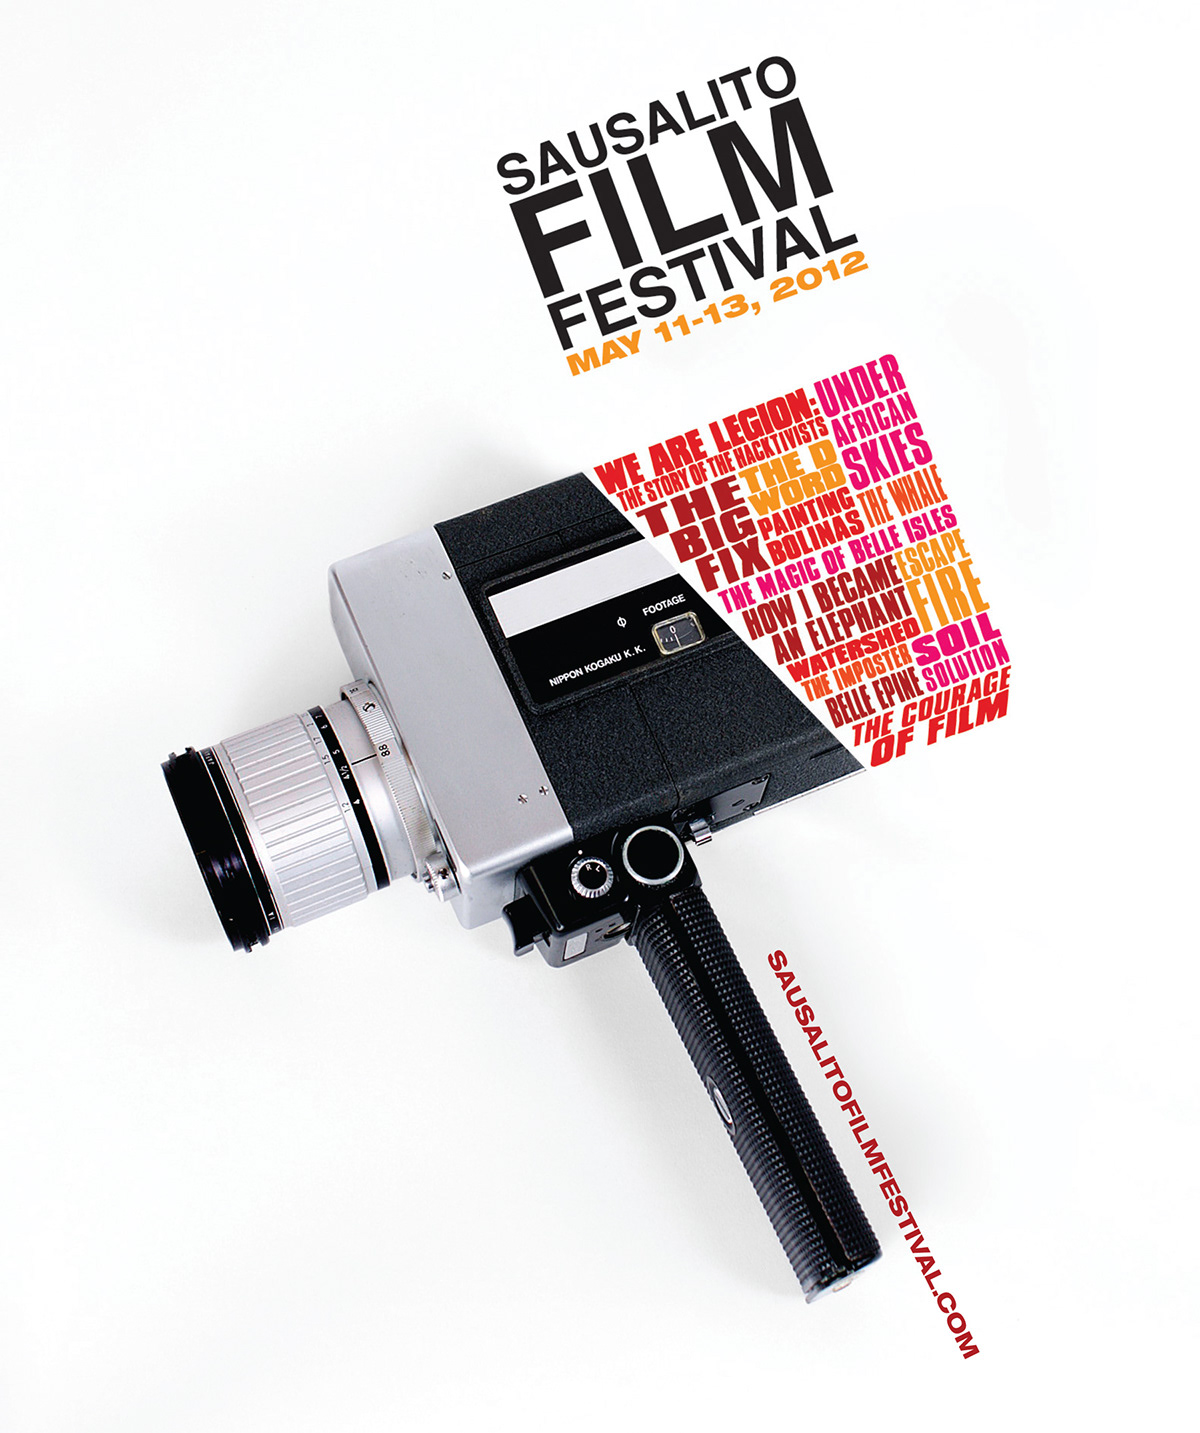 Sausalito Film Festival film festivals pro bono